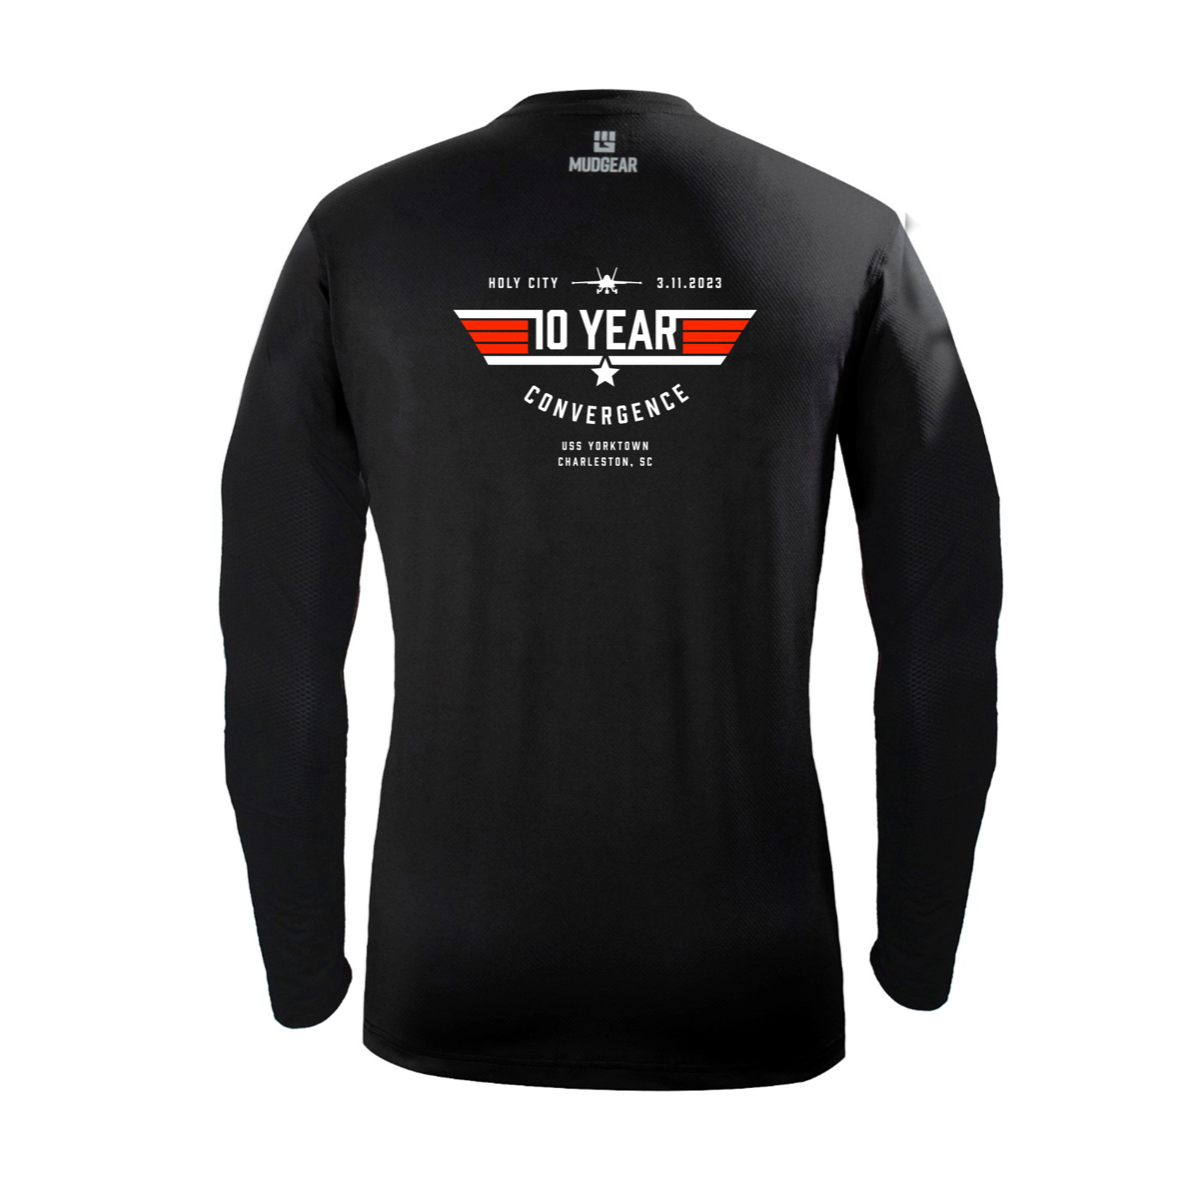 CLEARANCE ITEM - F3 Charleston 10 Year Convergence  - MudGear Fitted Performance Shirt VX - Long Sleeve (Black)